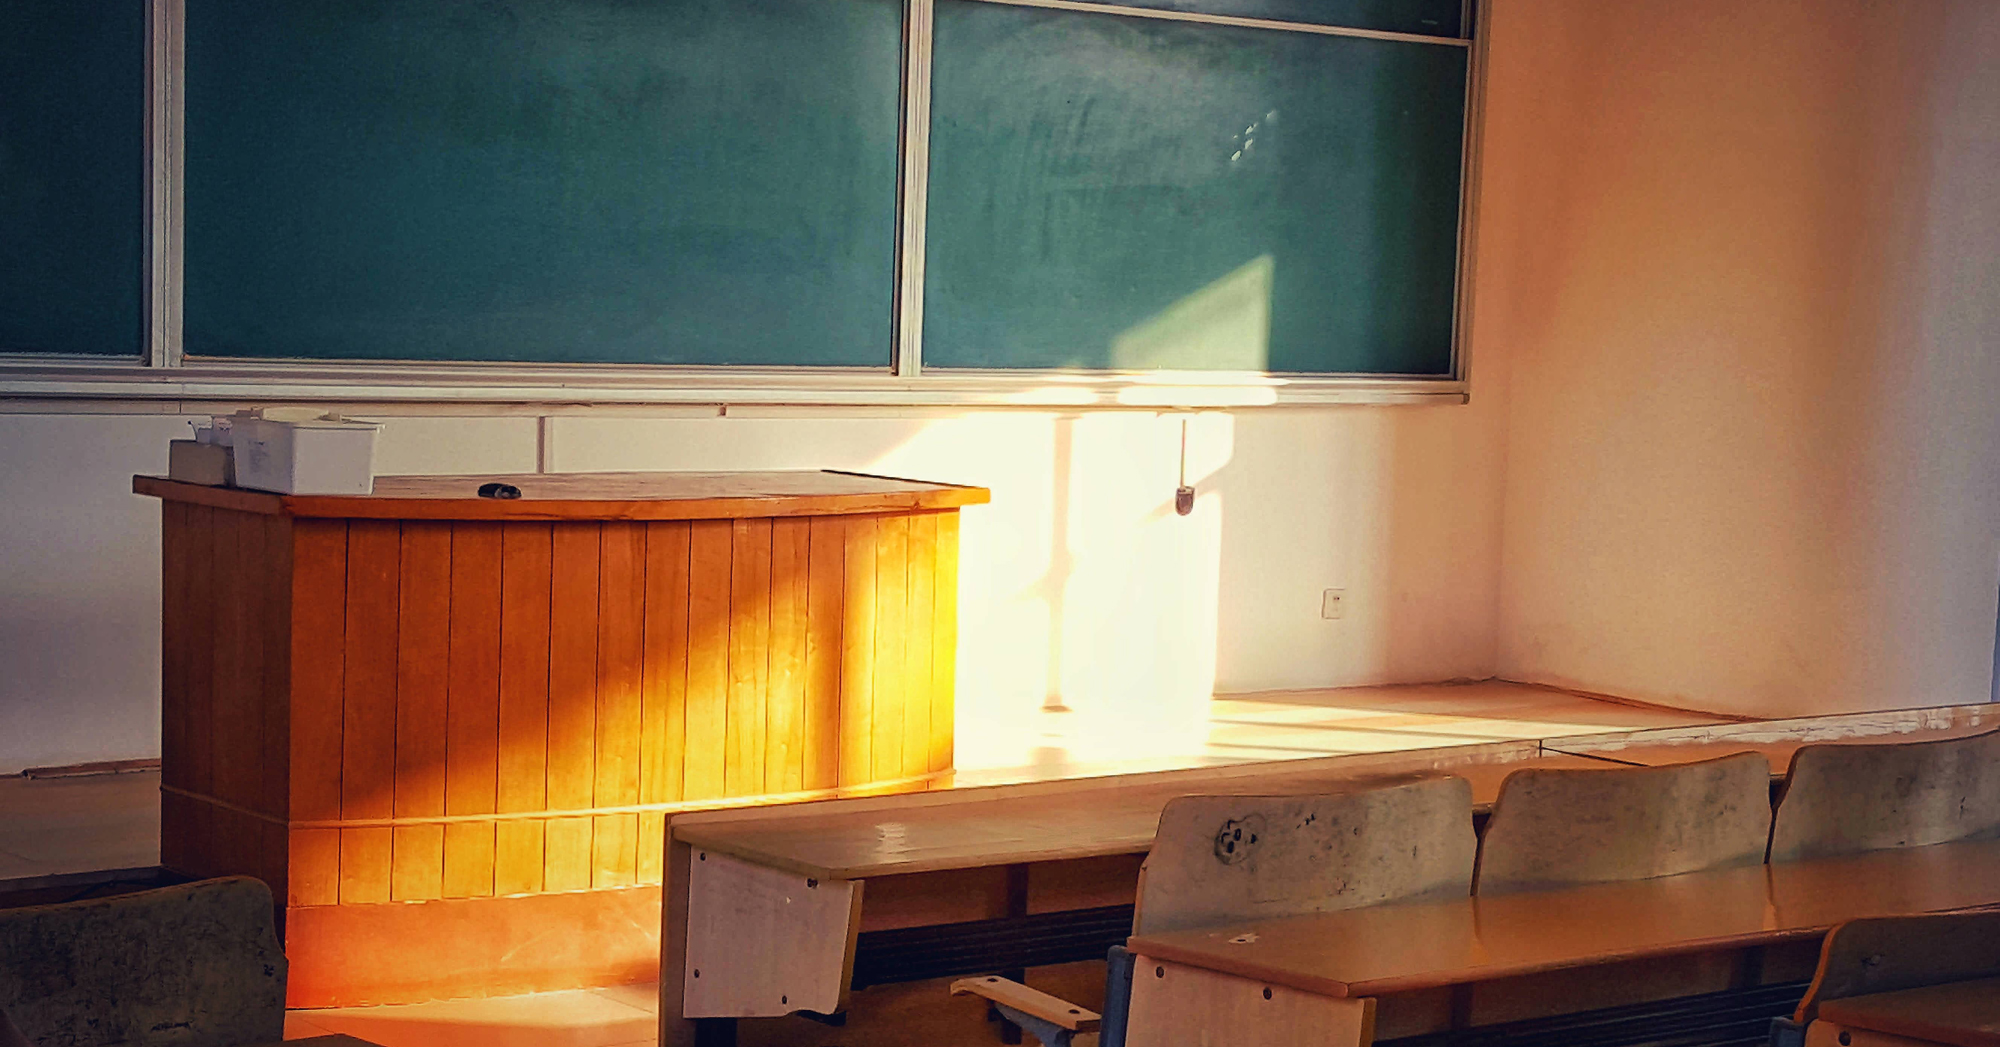 Photo by Barry Zhou (via Unsplash) of a blackboard, teacher's desk and students' desks in an empty classroom with sunlight streaming on the teacher's desk.